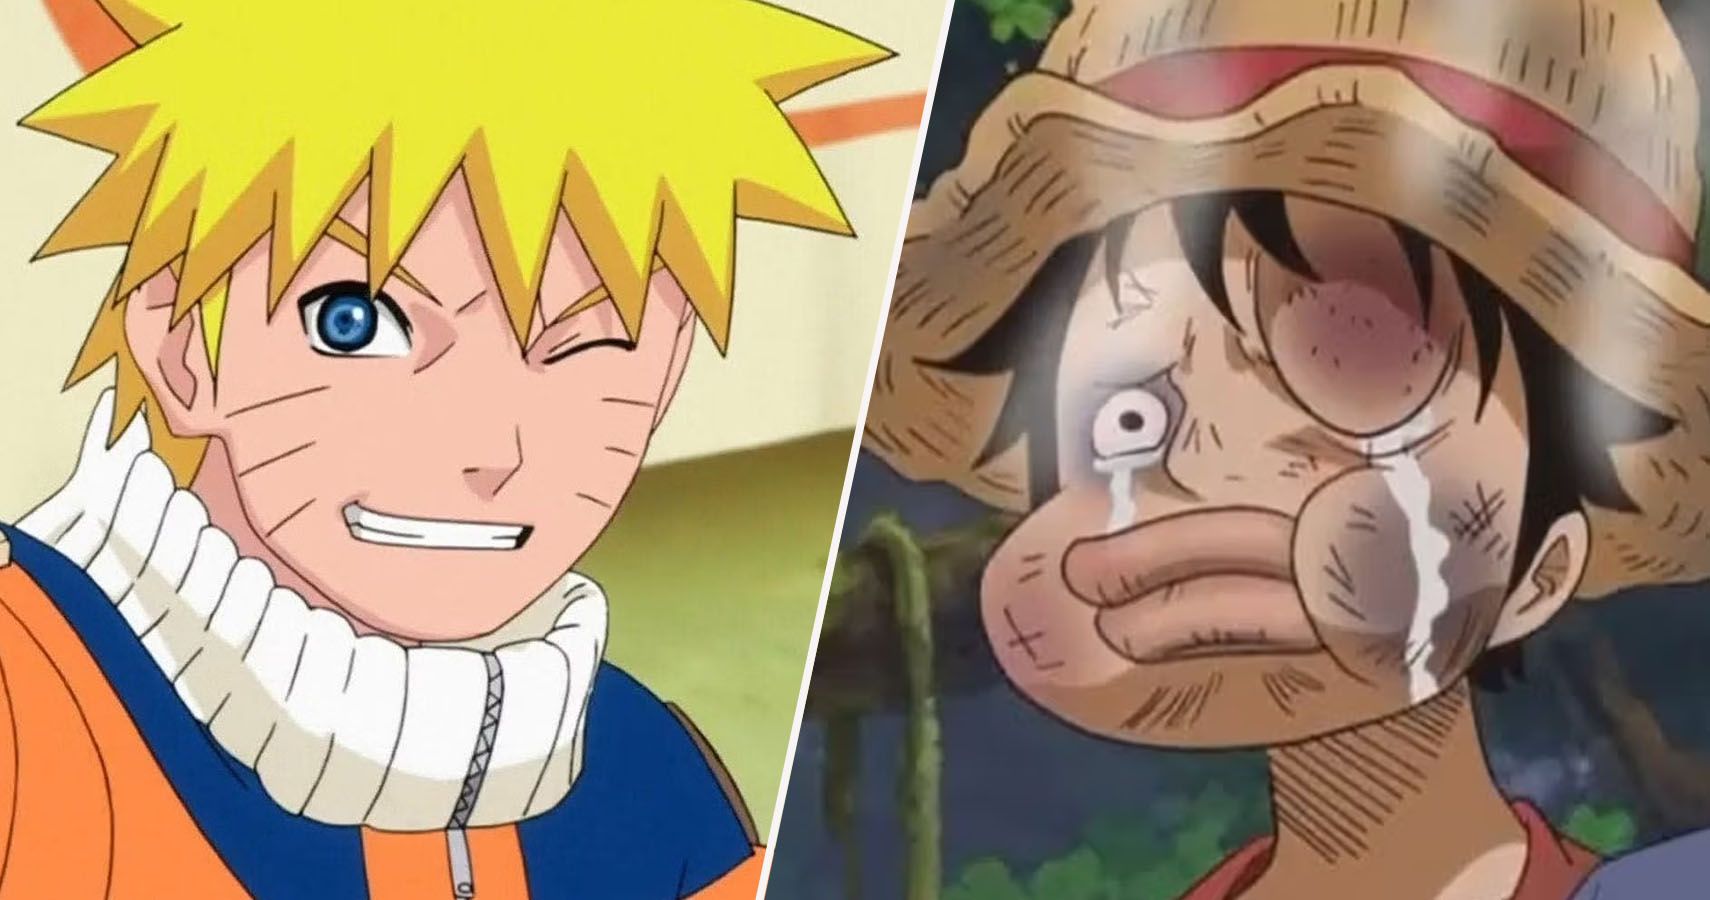 Naruto smiling and Luffy crying